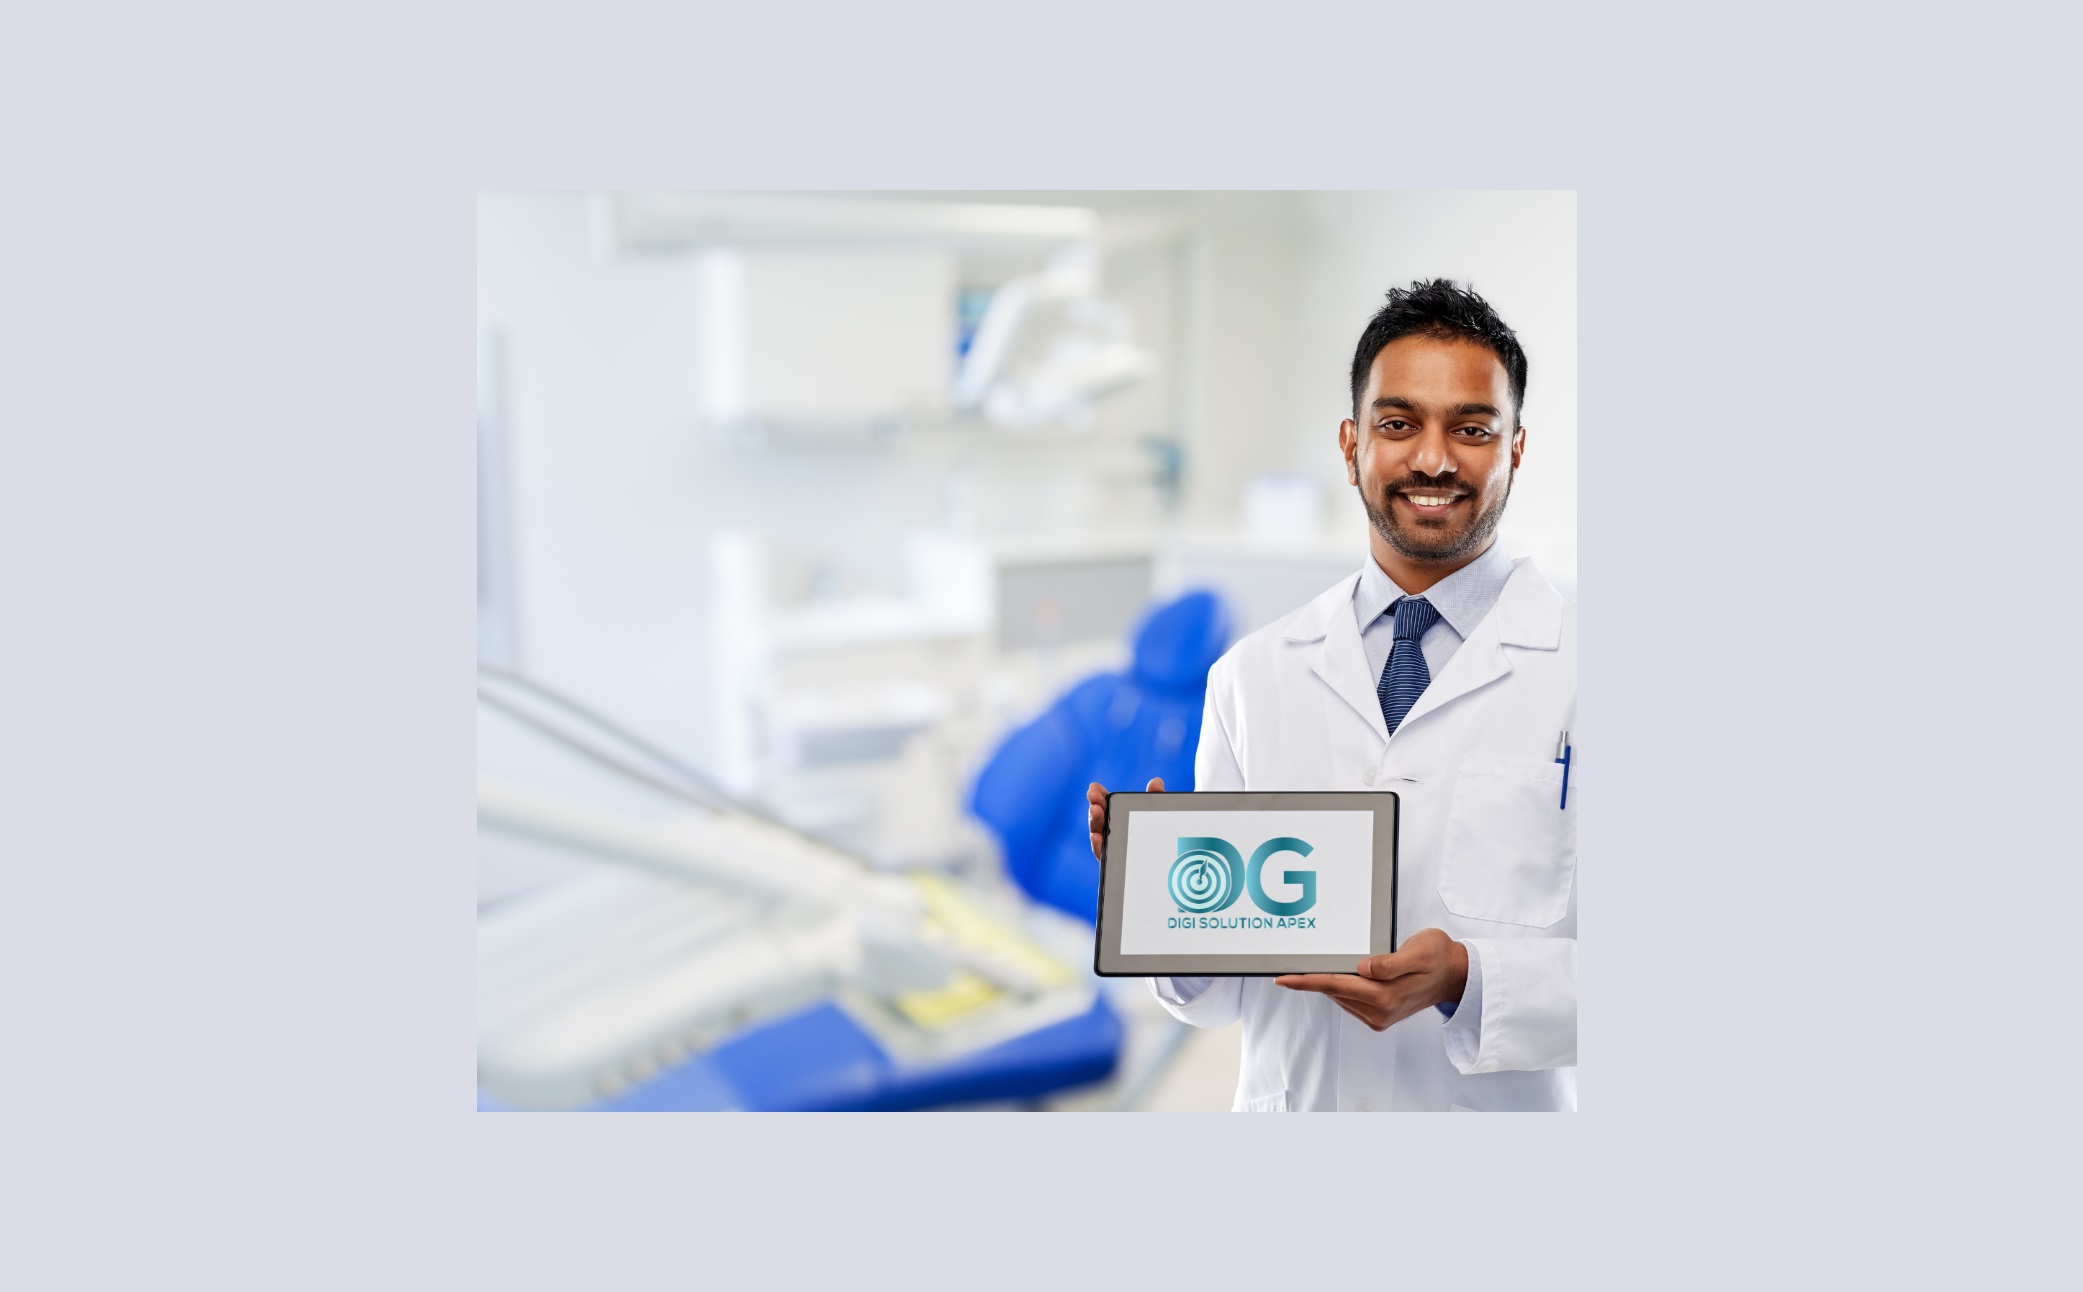 Digi Solution Apex: Transforming Dental & Medical Practice Revenue with Revolutionary Digital Marketing